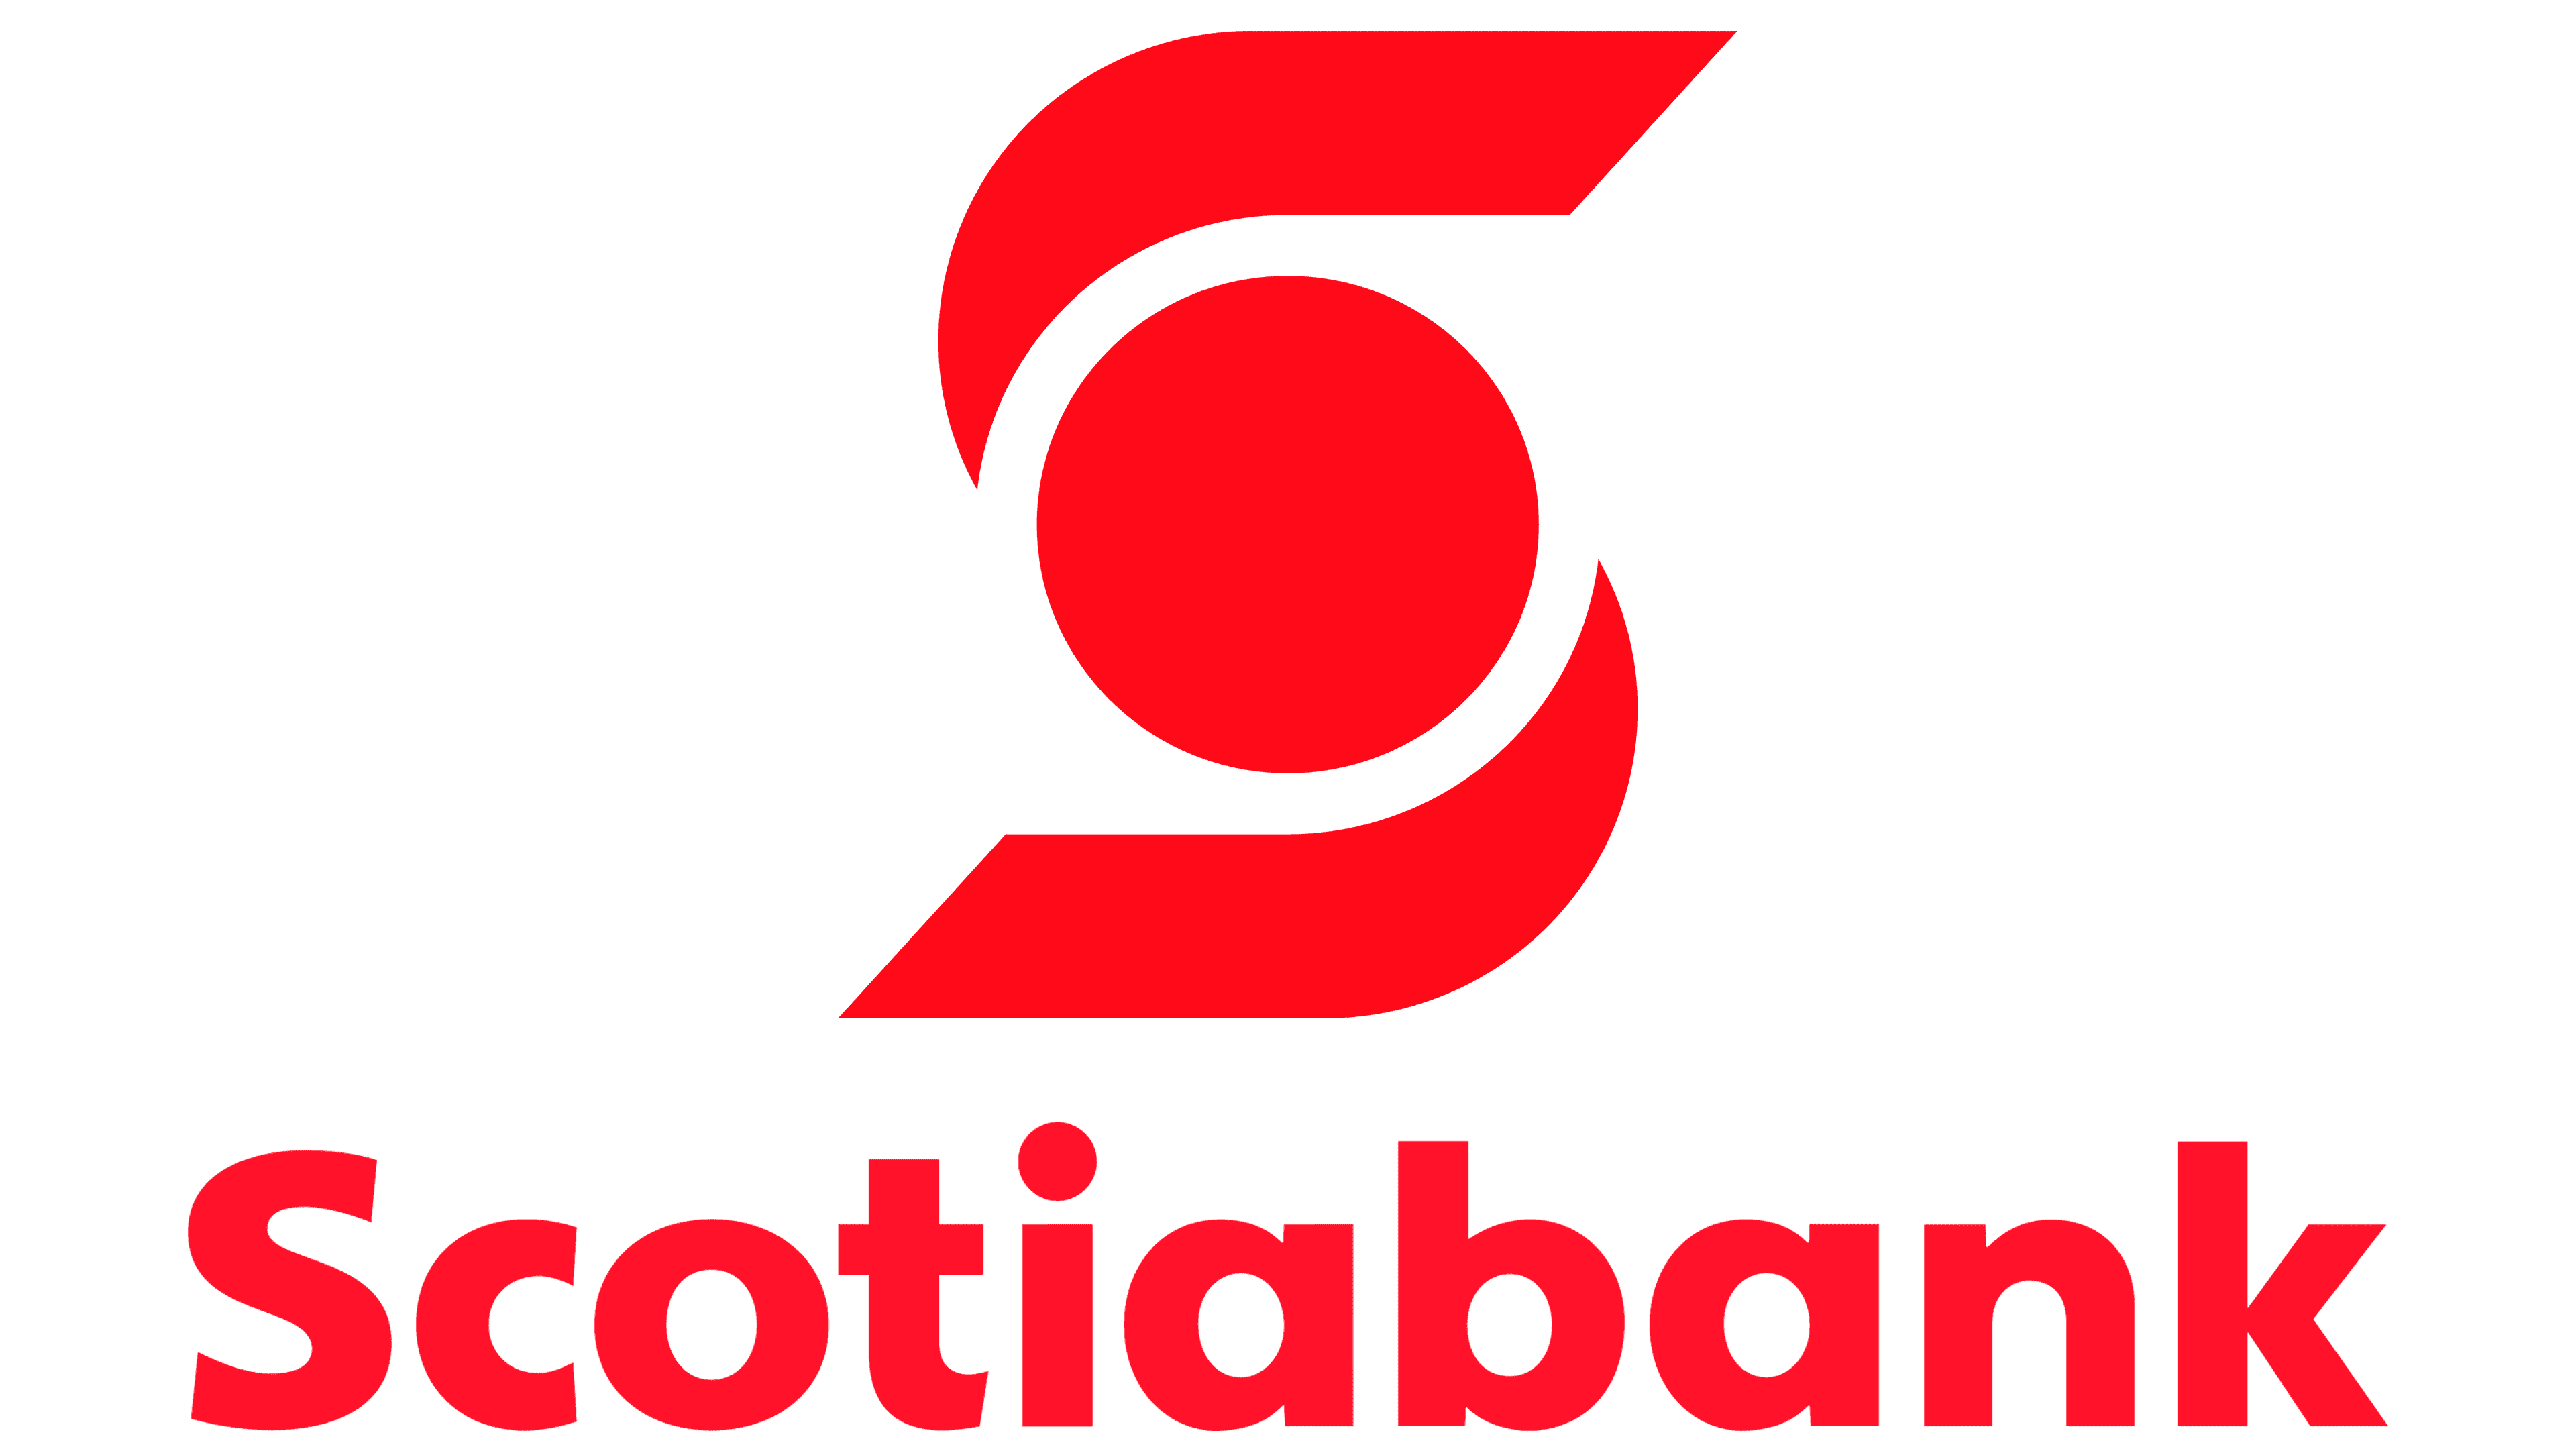 Scotiabank Student Banking Advantage® Plan